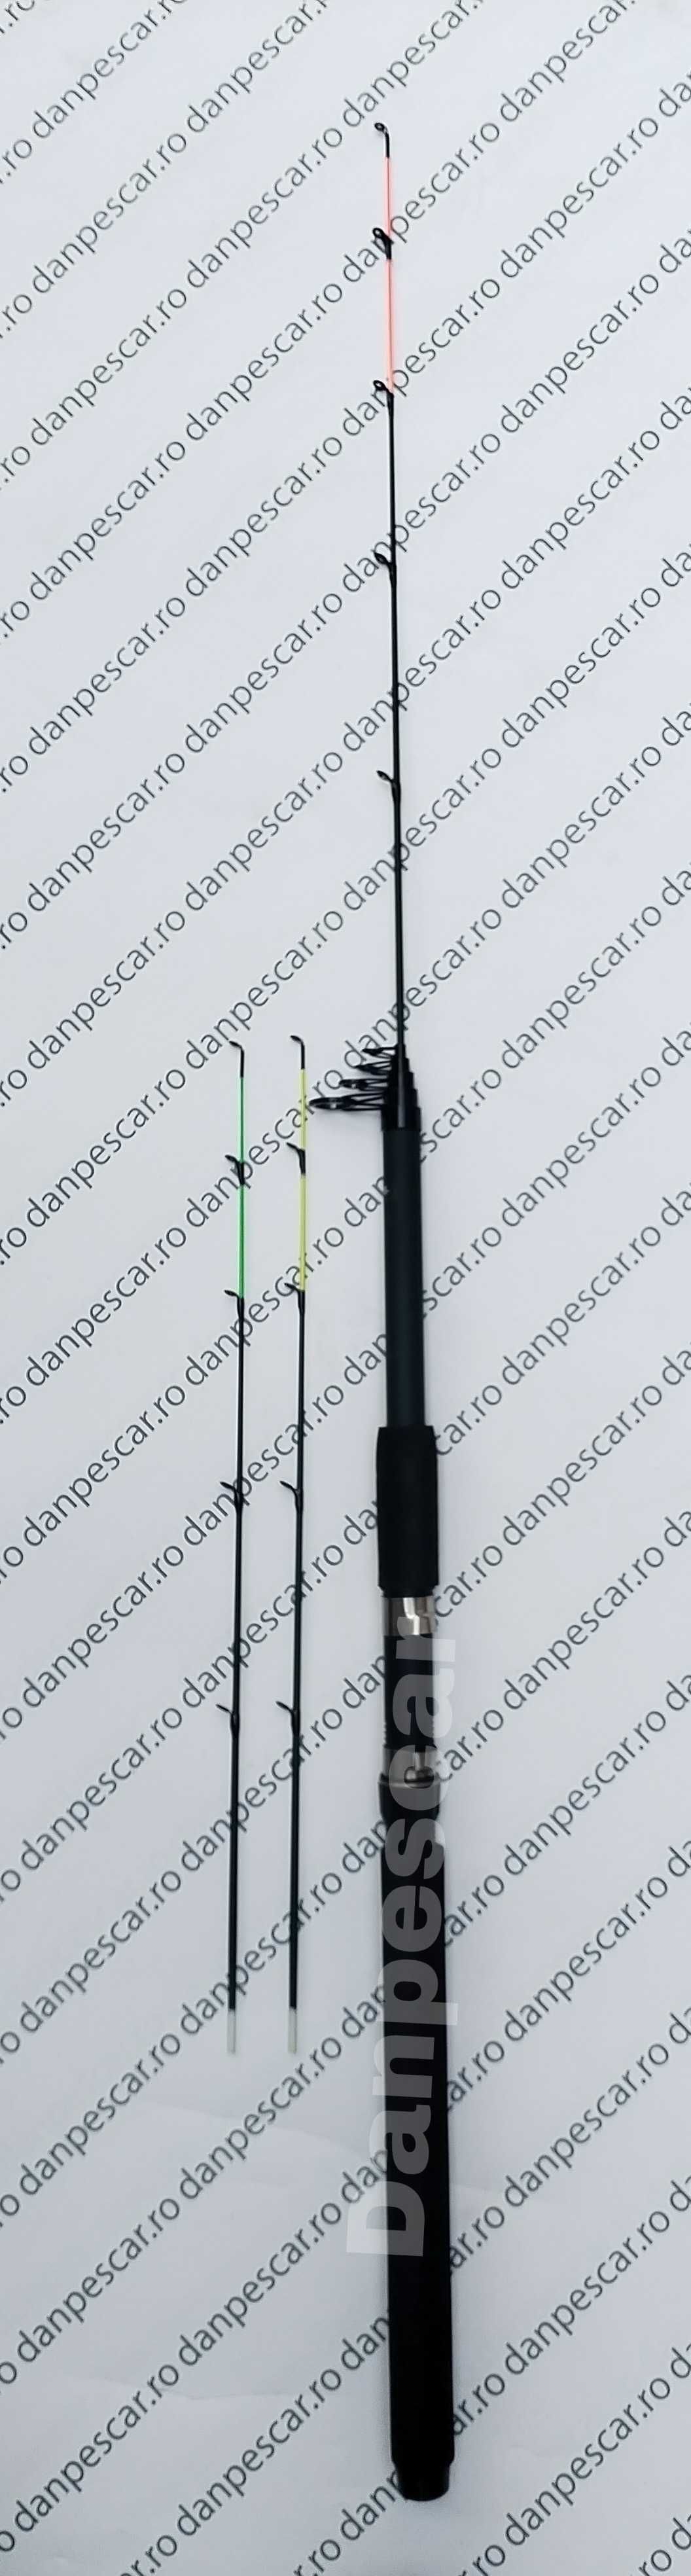 Lanseta fibra sticla ROBIN HAN Power tele feeder 3 metri 90-150gr